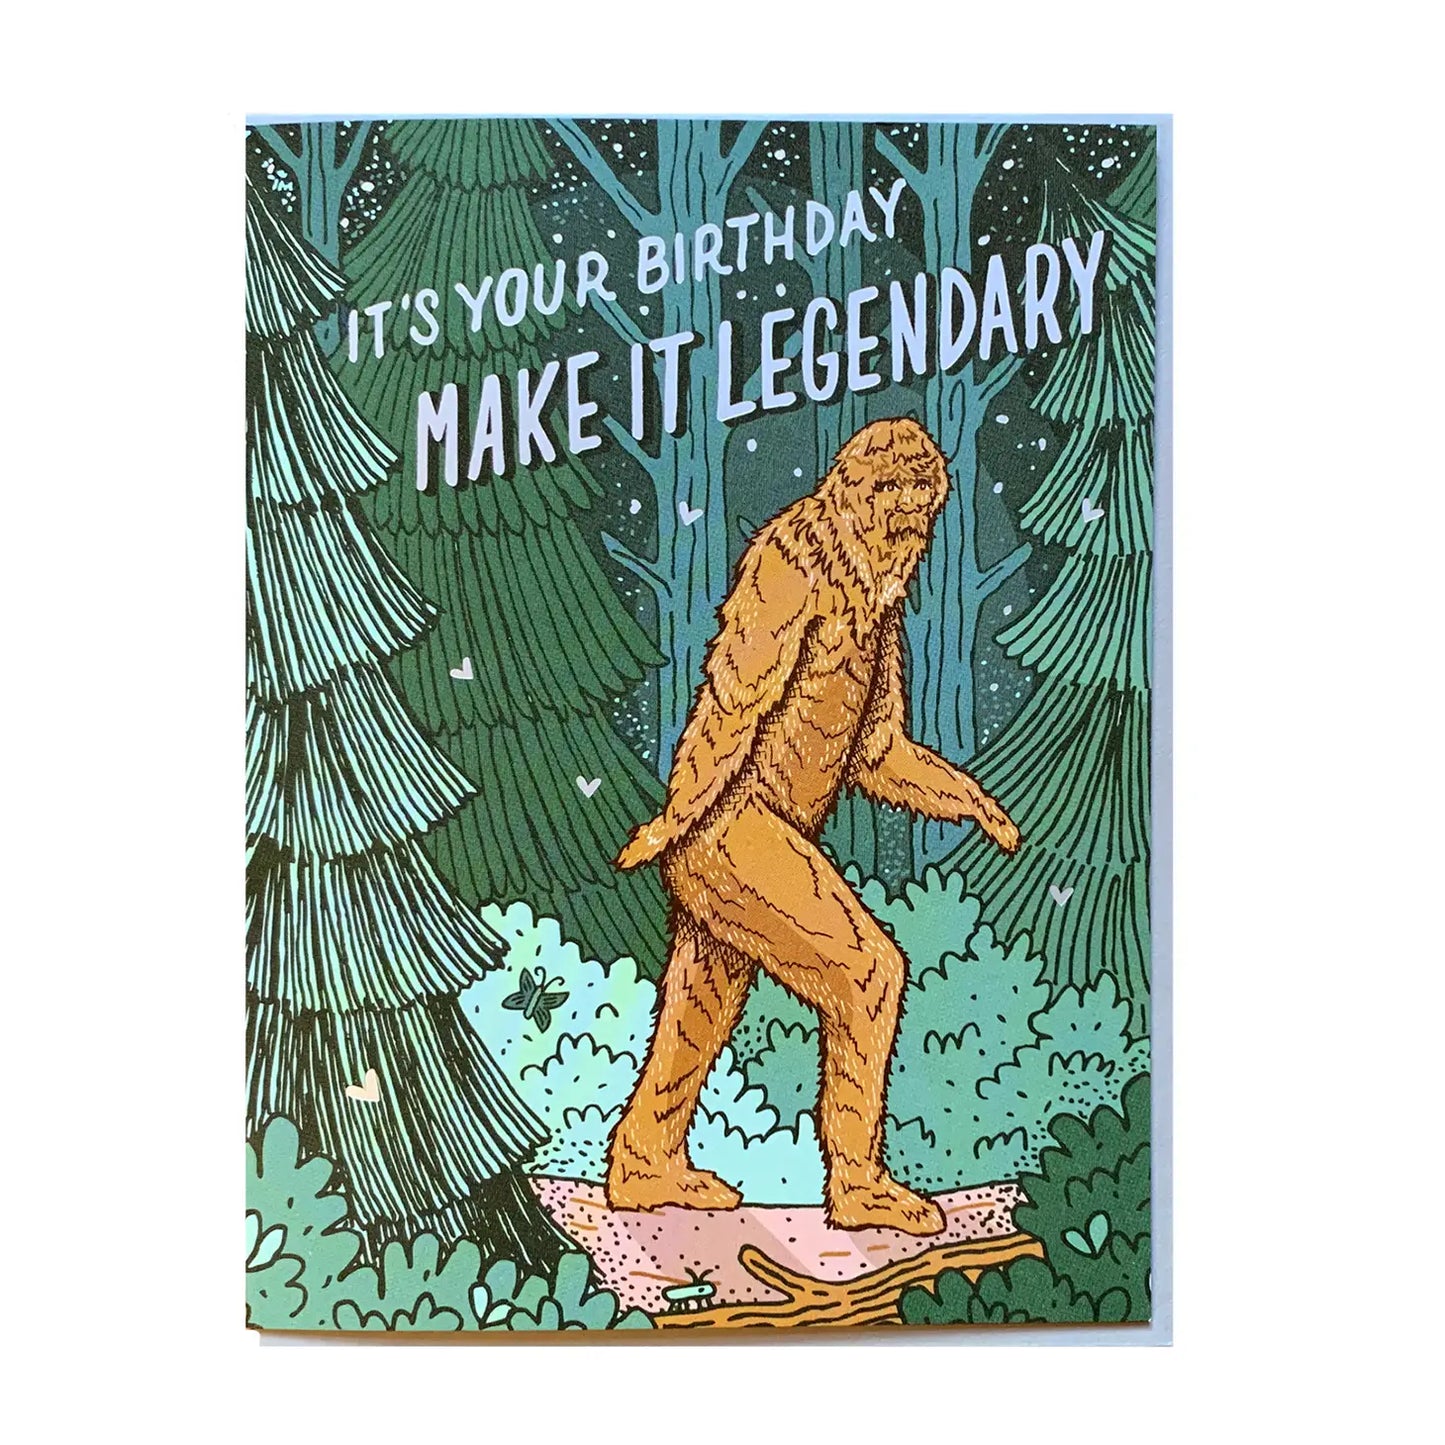 Bigfoot Legendary Birthday Greeting Card